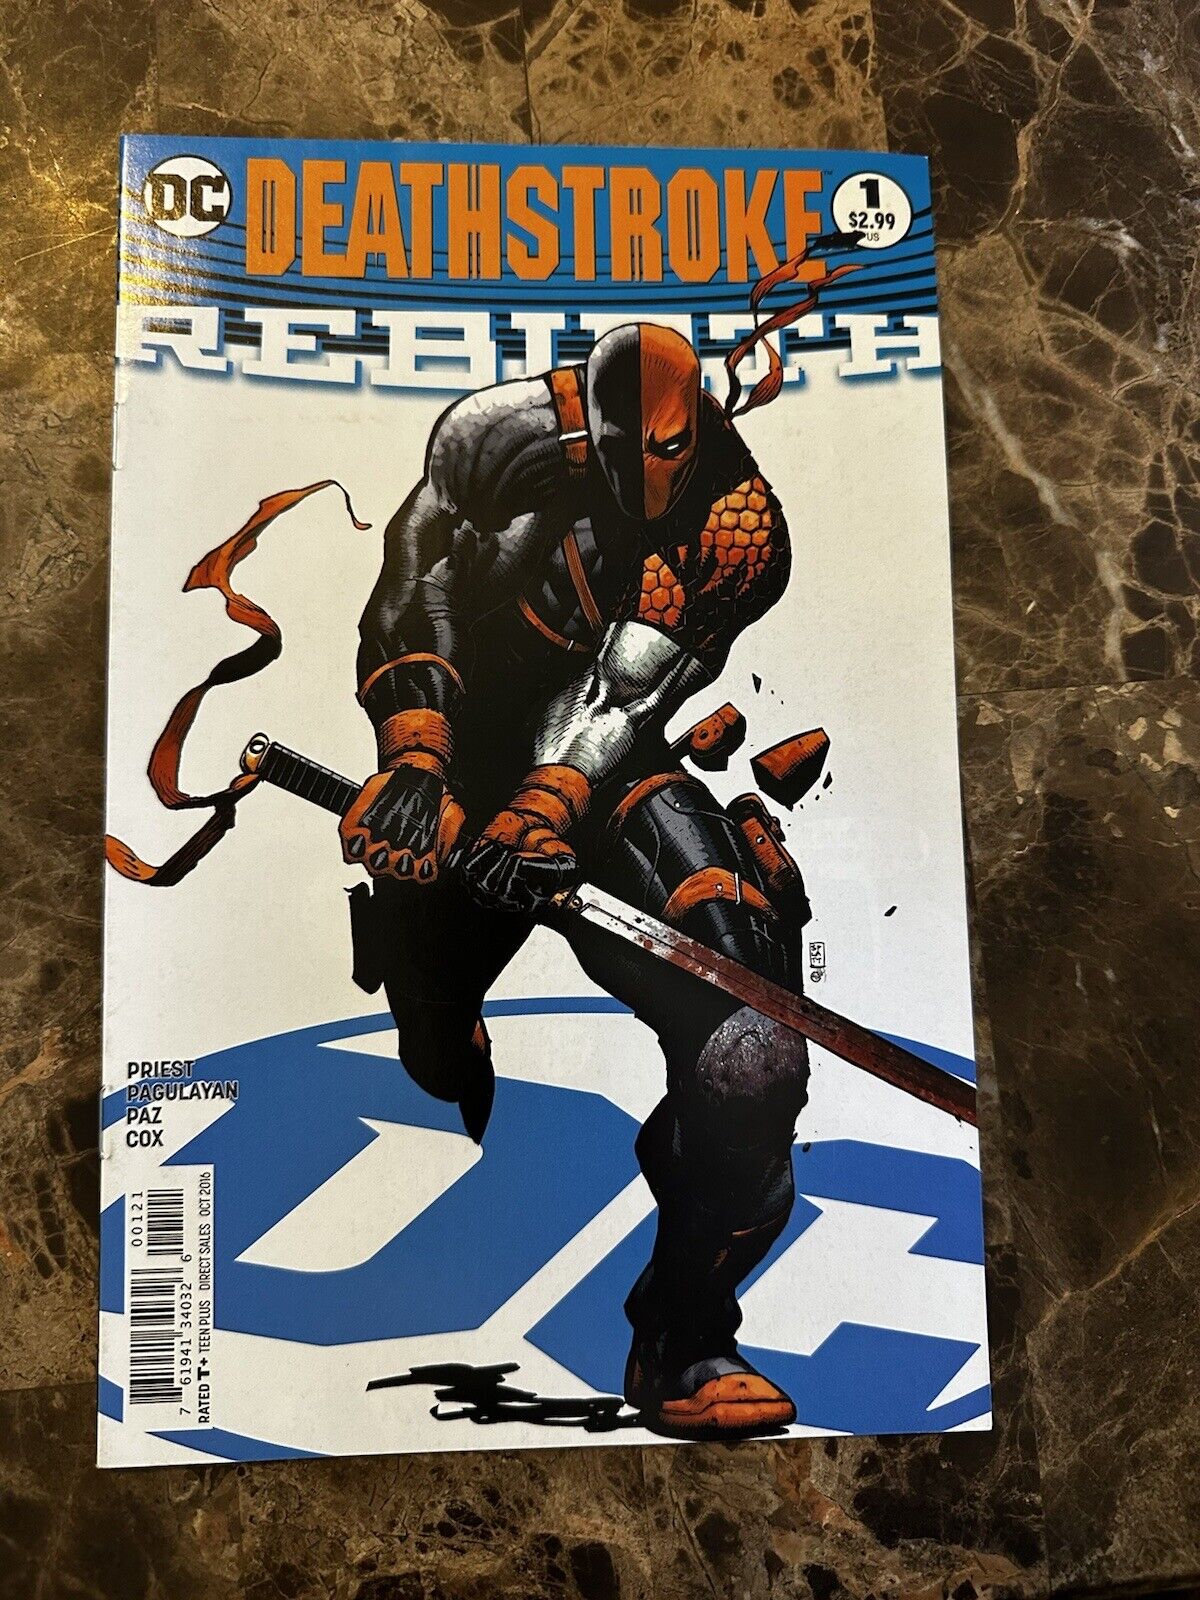 Deathstroke: Rebirth #1 (DC Comics, October 2016)